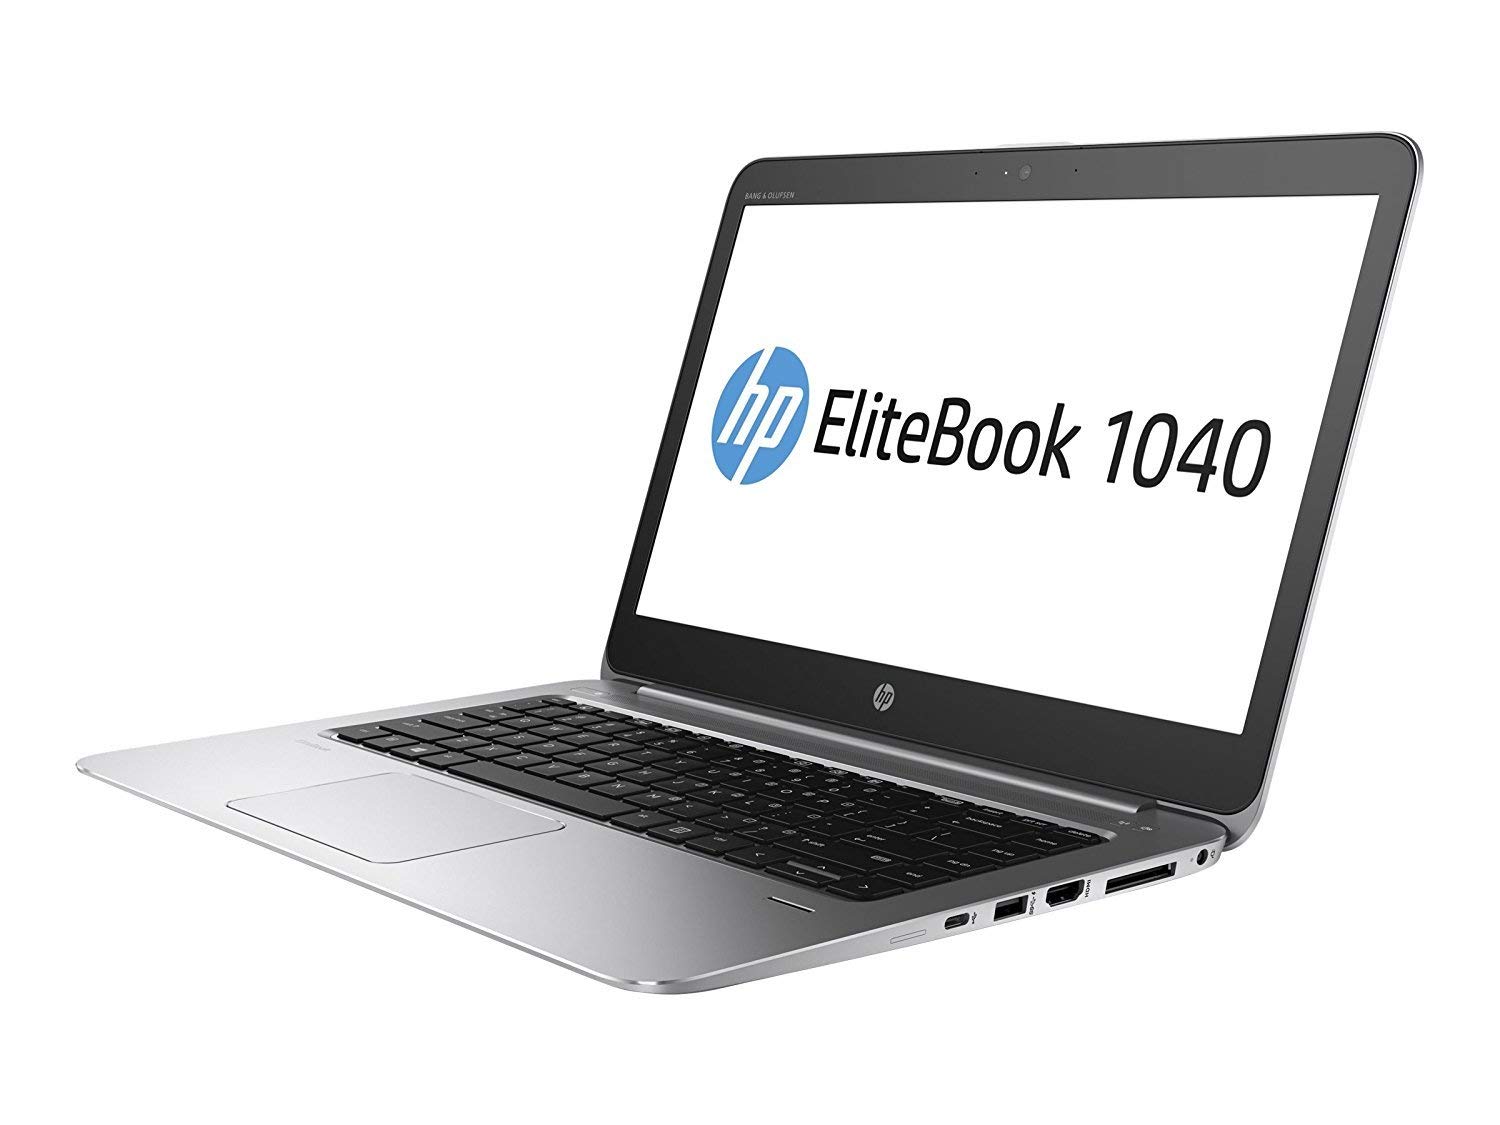 HP Elitebook Folio 1040 G3 | 14 FHD Display / Intel Core i7-6600U 2.6Ghz / 8GB / 256GB SSD / Fingerprint Scanner / Webcam / HDMI / Windows 10 Pro (Renewed)